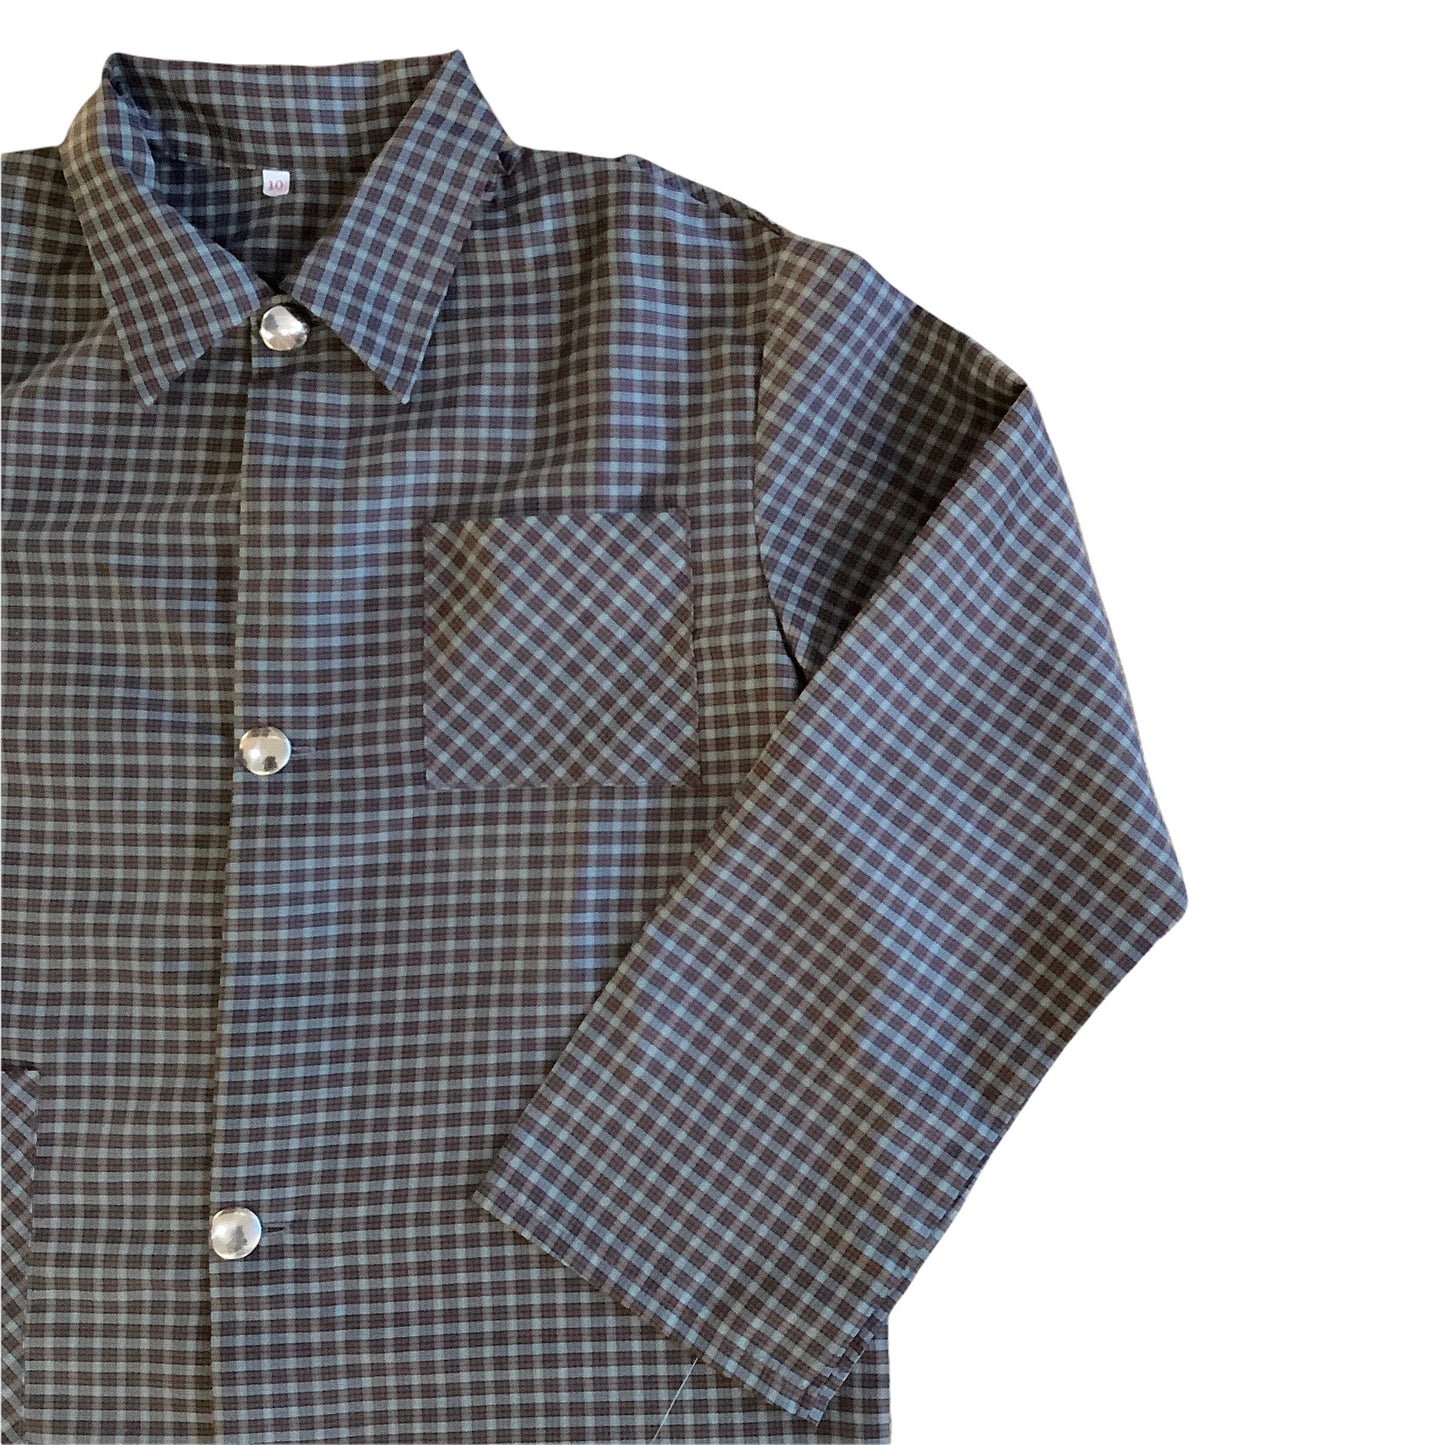 Vintage 1960s Check  School Nylon Shirt / Blouse  8-10Y